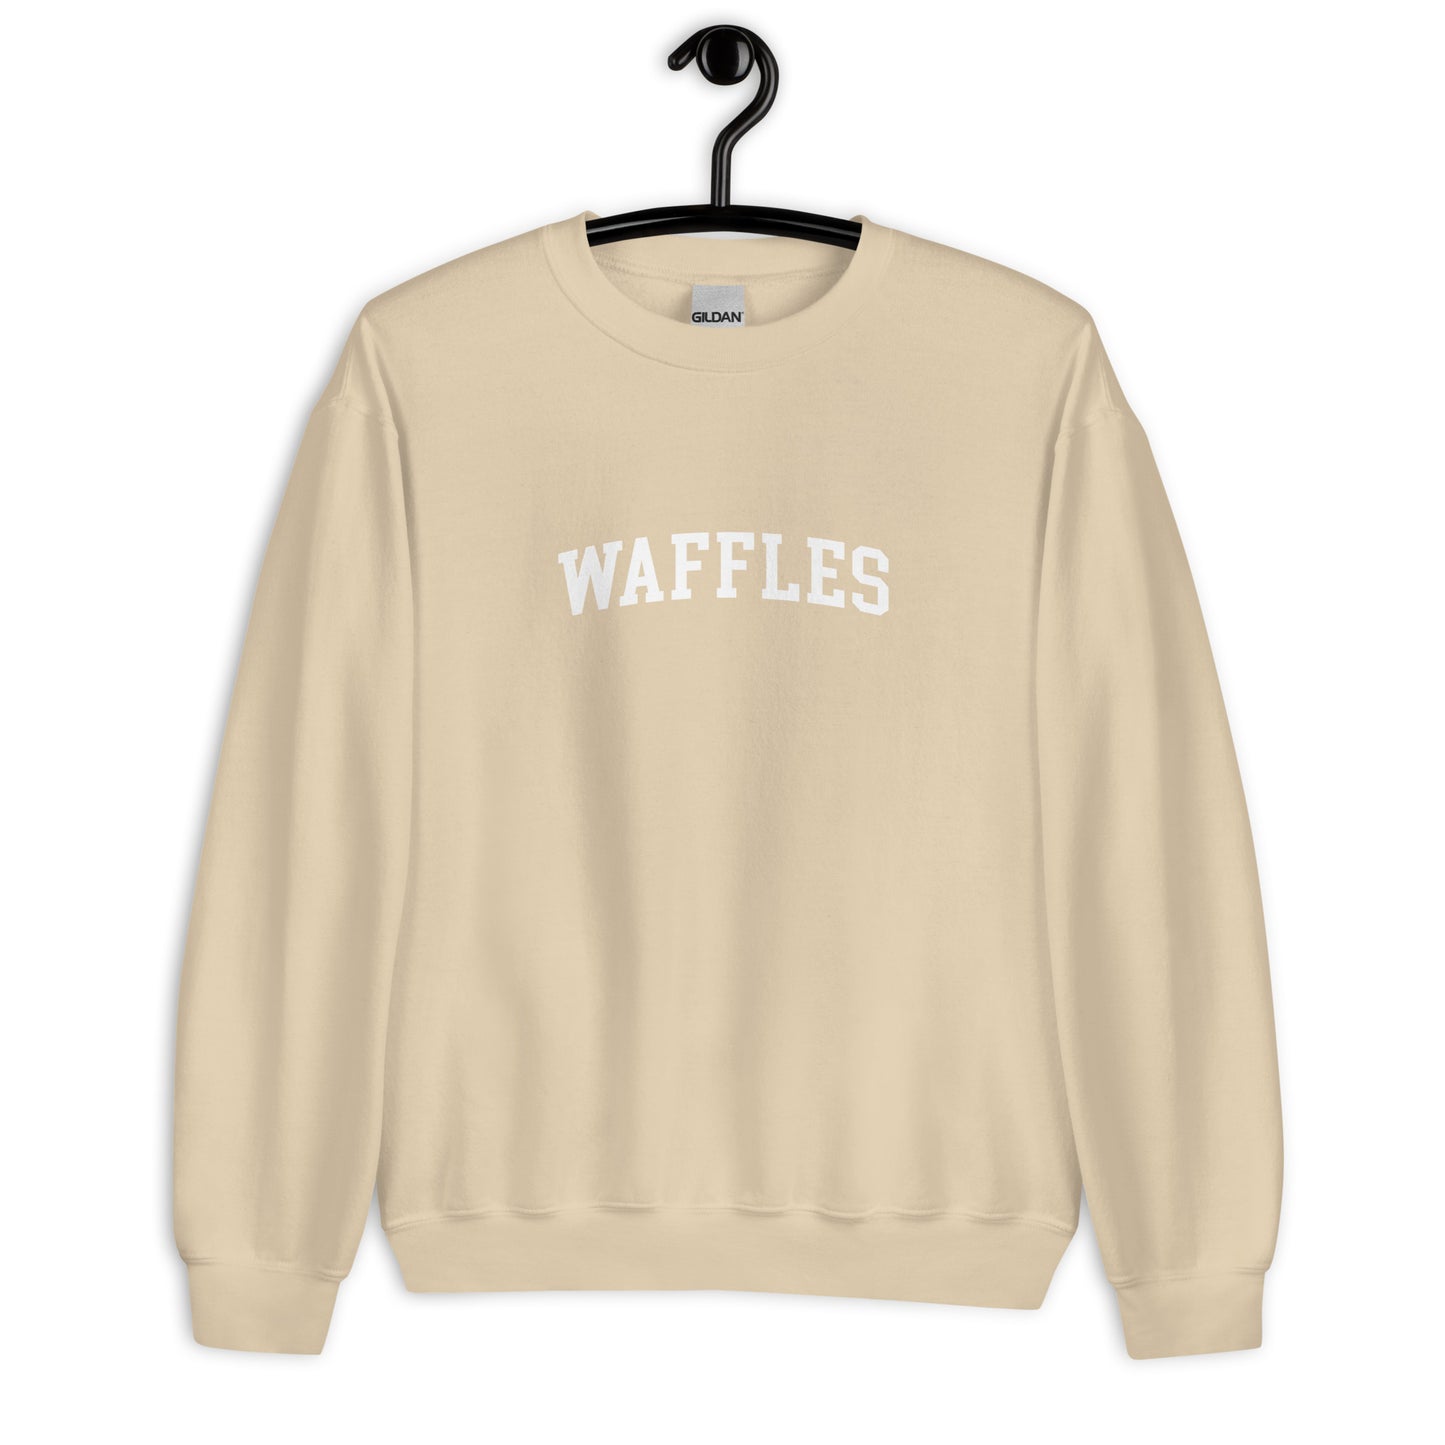 Waffles Sweatshirt - Arched Font